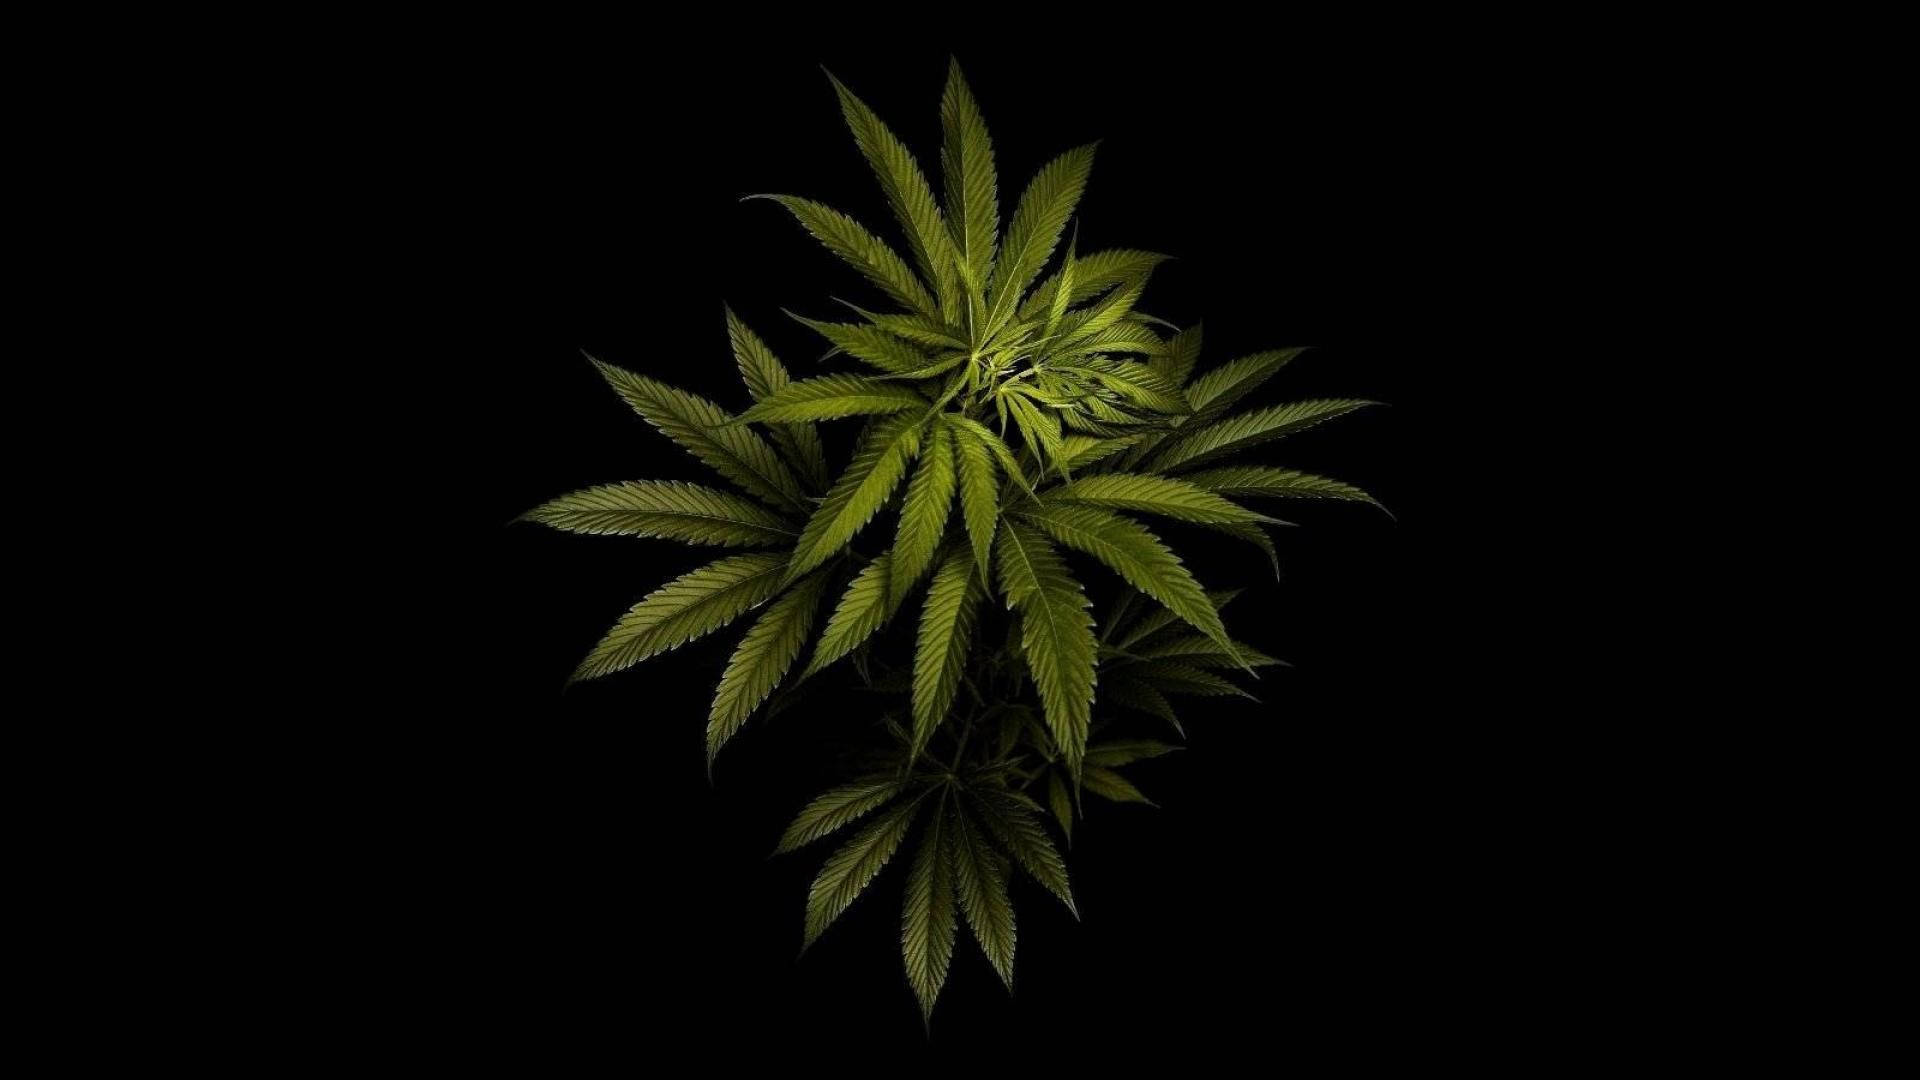 Plain Cannabis On Black Background